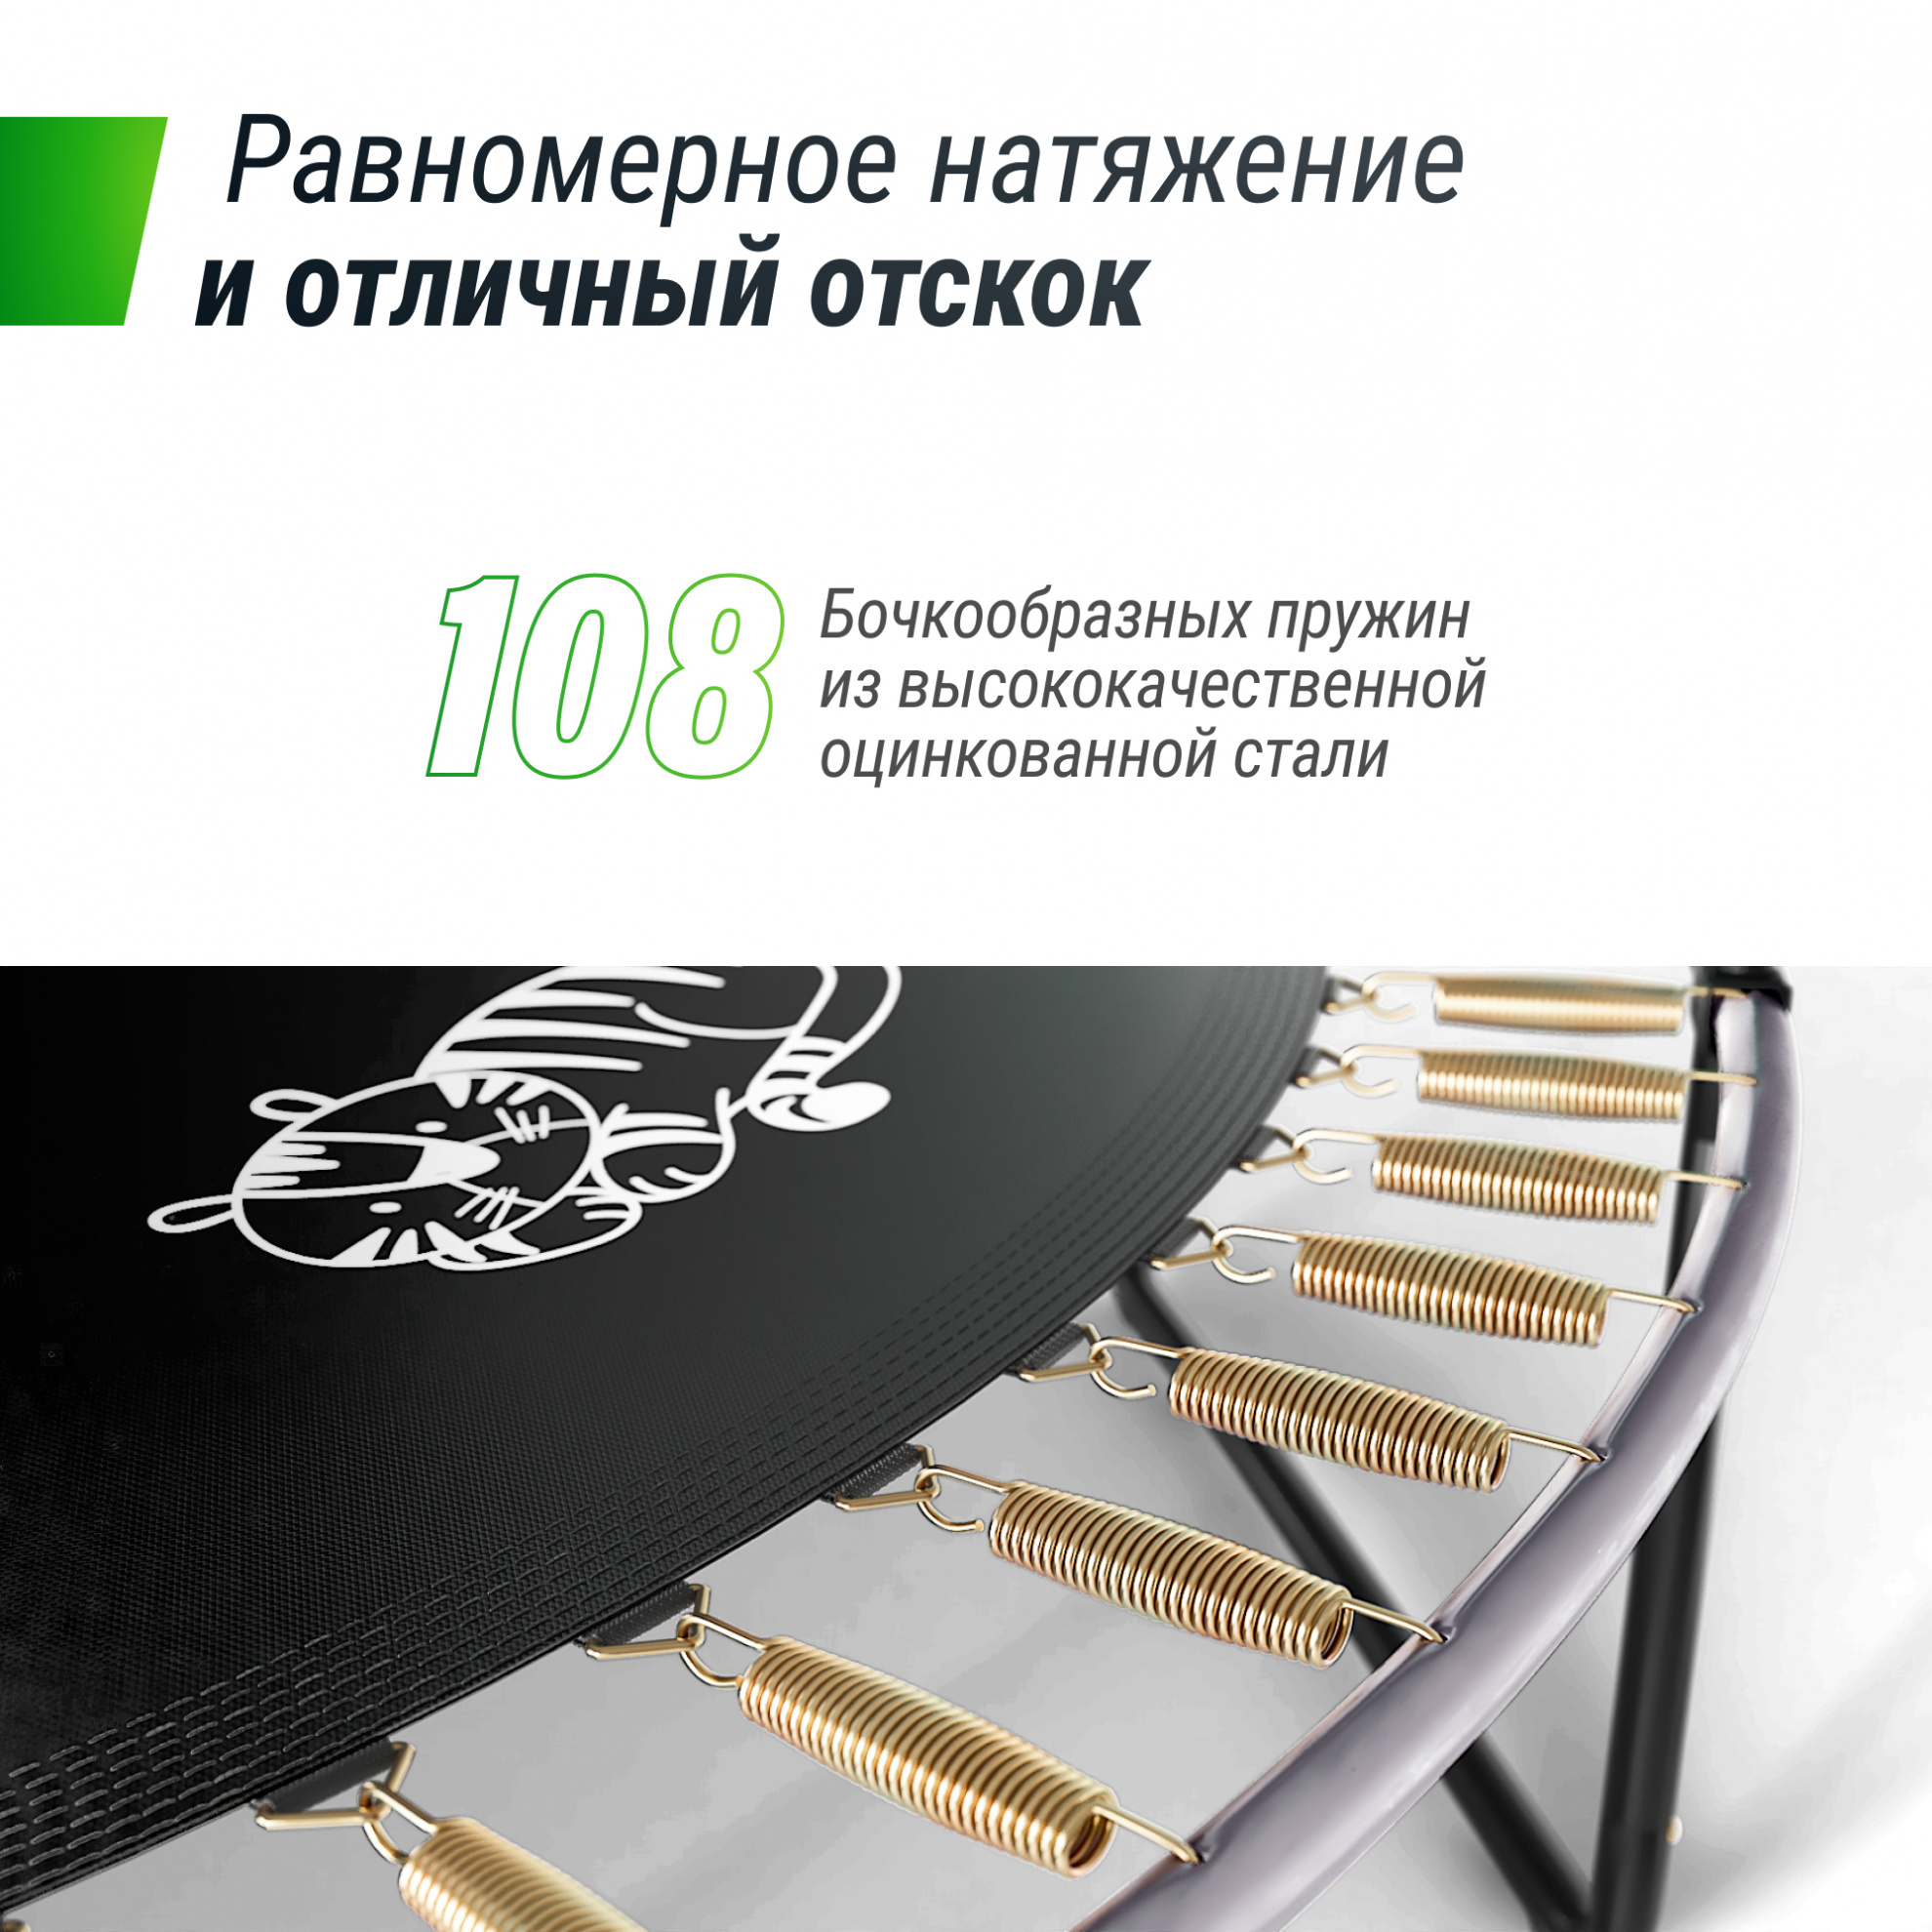 Unix Line Supreme Game 16FT / 488 см (Green) из каталога батутов с защитной сеткой в Москве по цене 67290 ₽